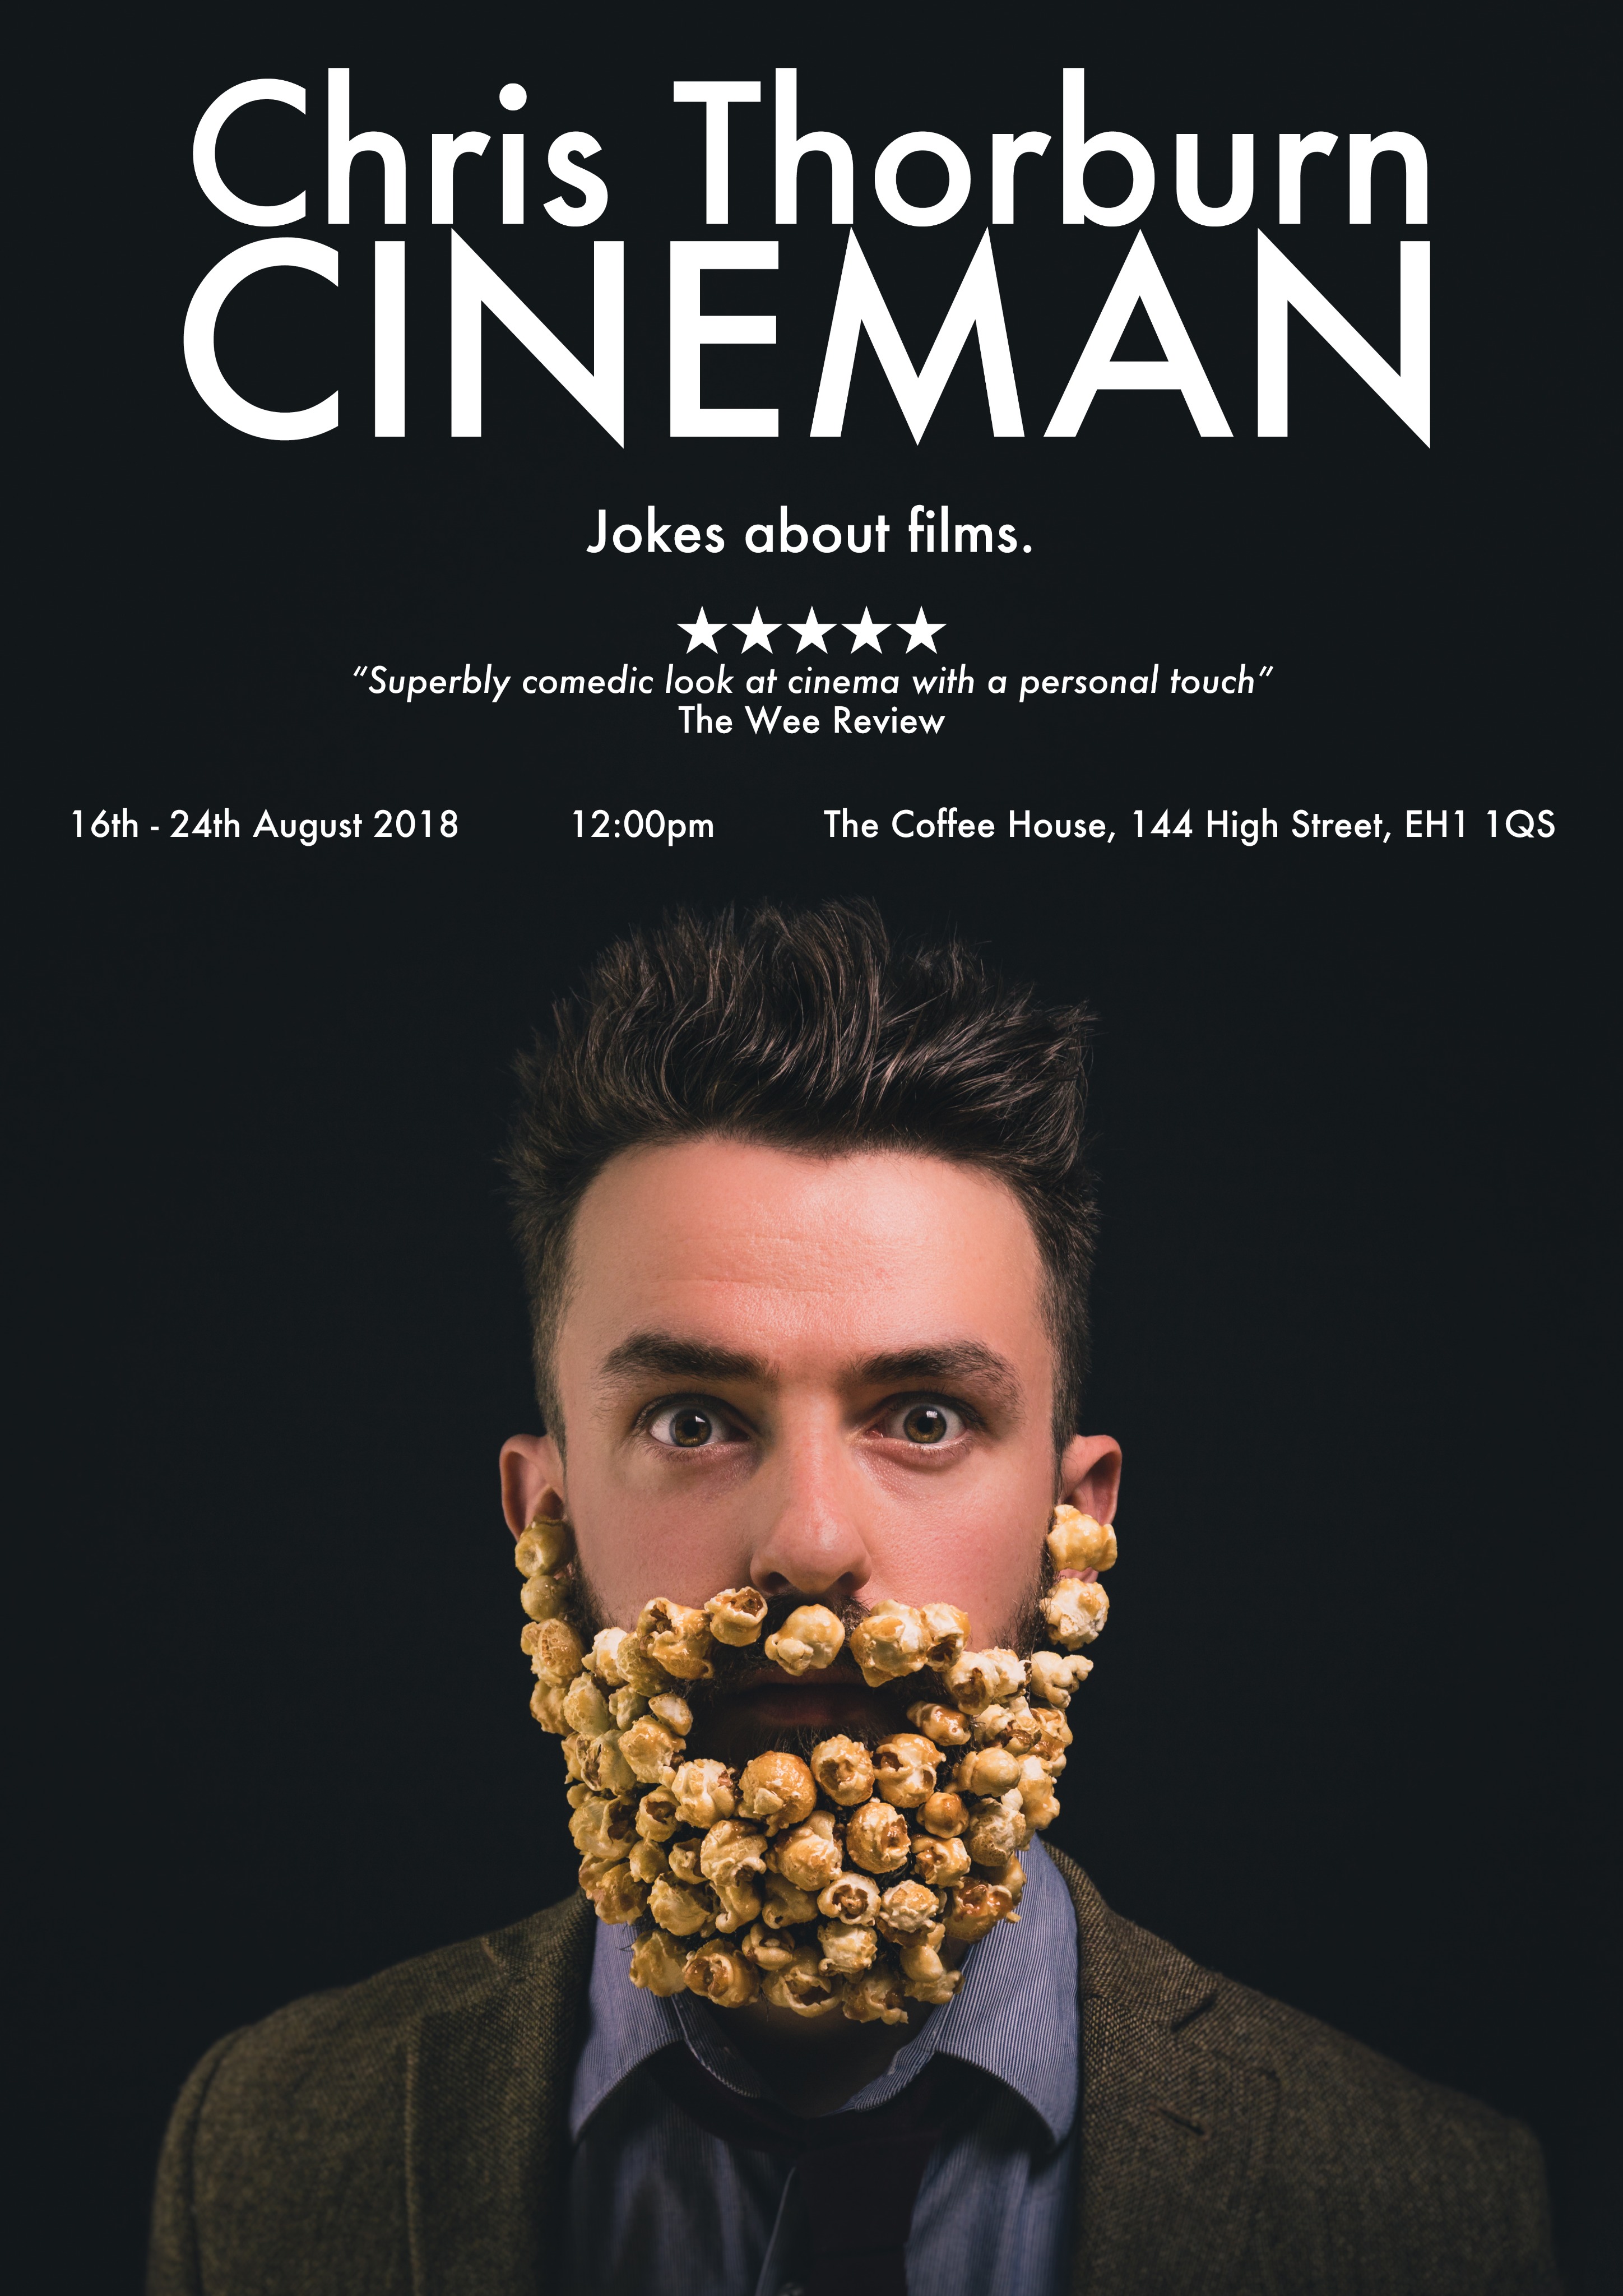 The poster for Chris Thorburn: Cineman